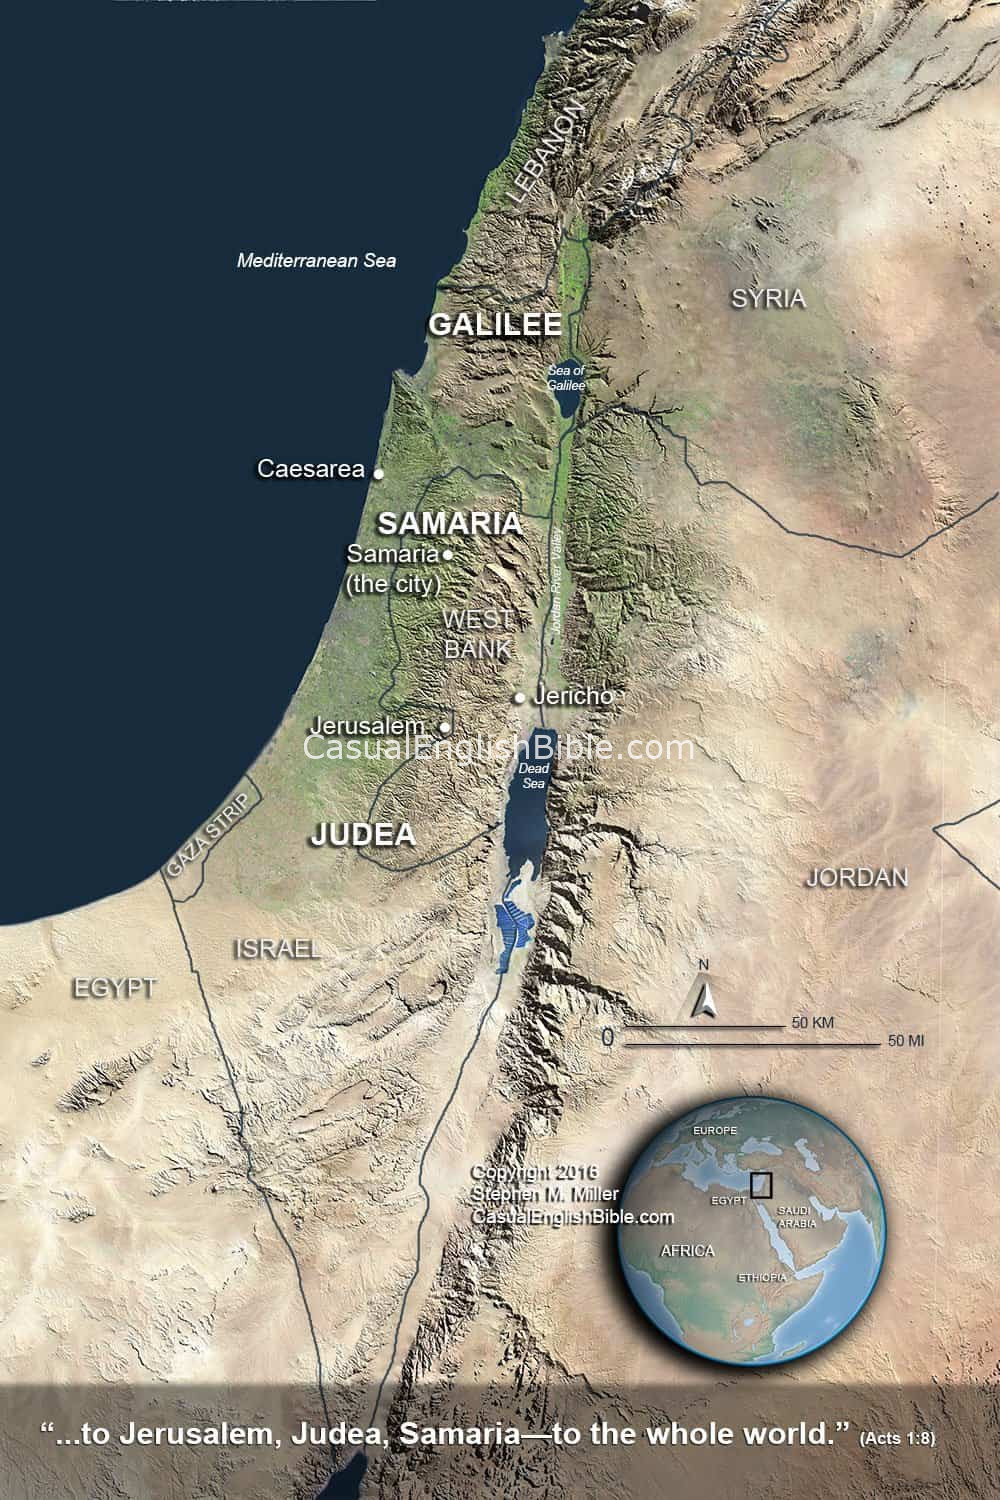 Map for Acts 1 of Jerusalem, Judea, Samaria. Copyright Stephen M. Miller Inc.